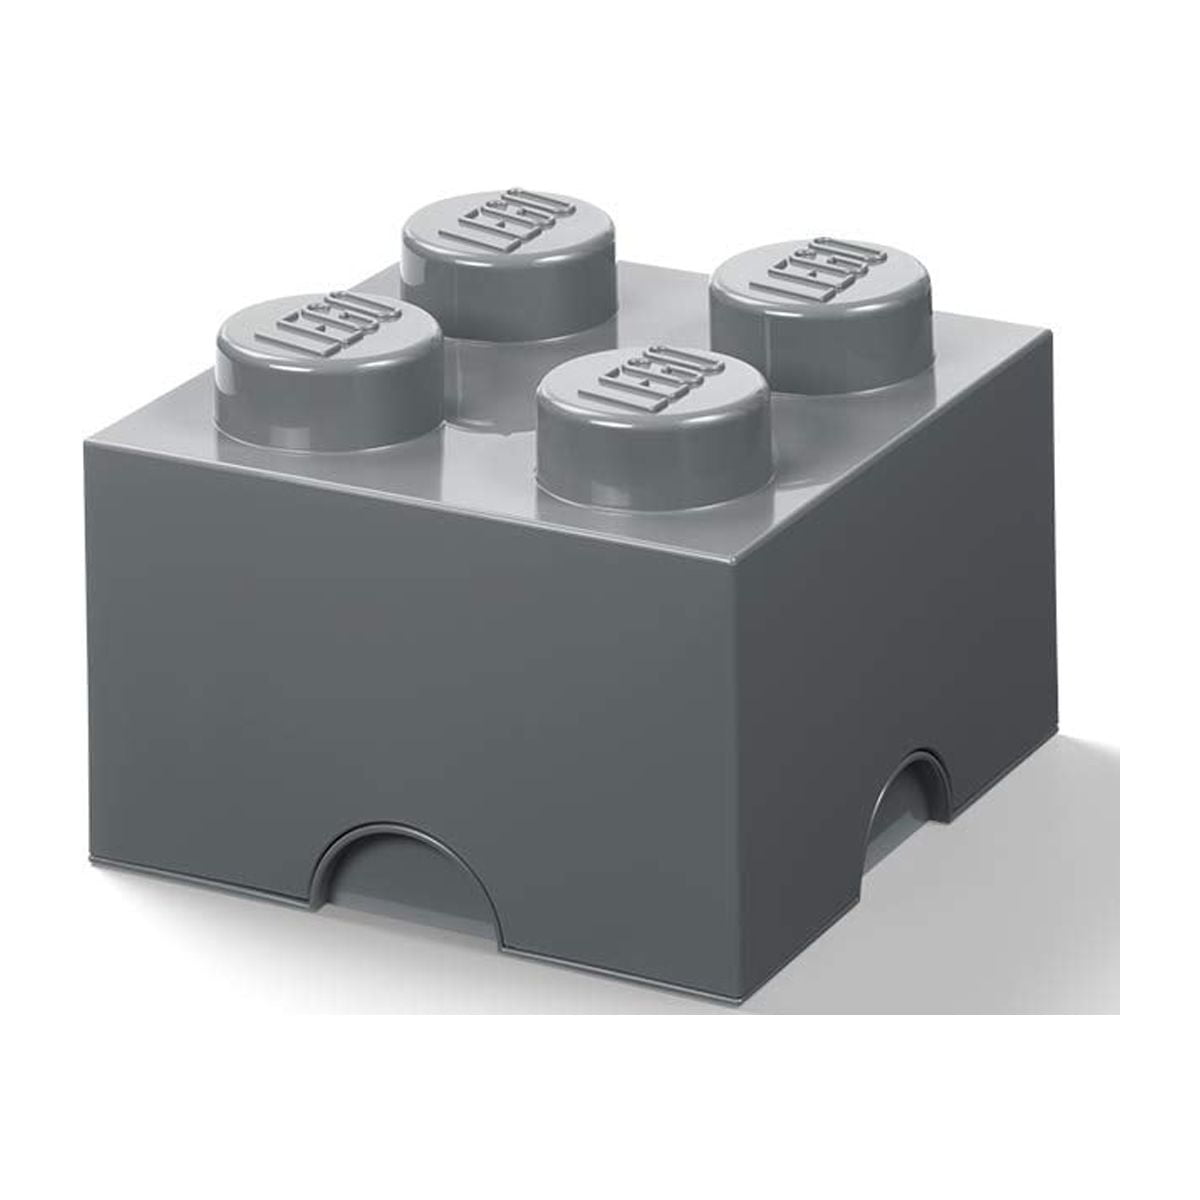  Room Copenhagen LEGO Brick Scooper Set - 1 Large Dark